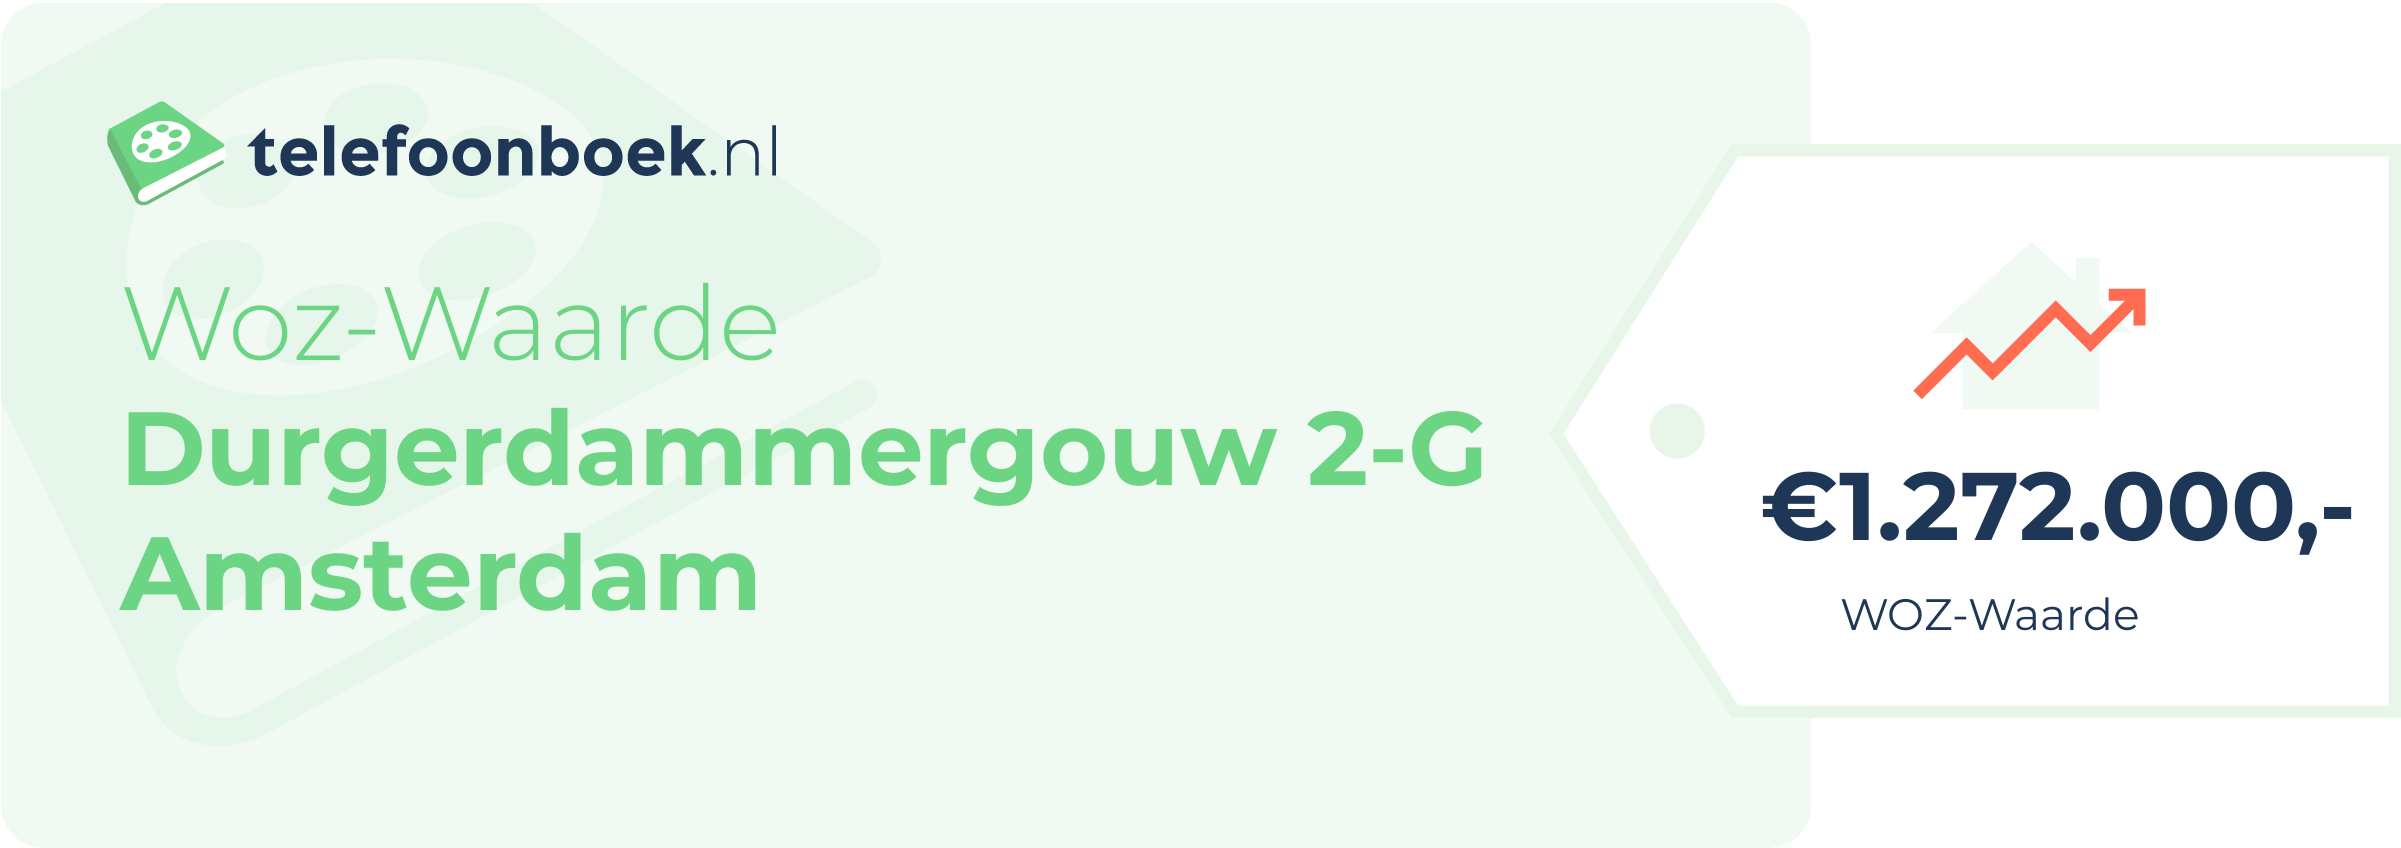 WOZ-waarde Durgerdammergouw 2-G Amsterdam